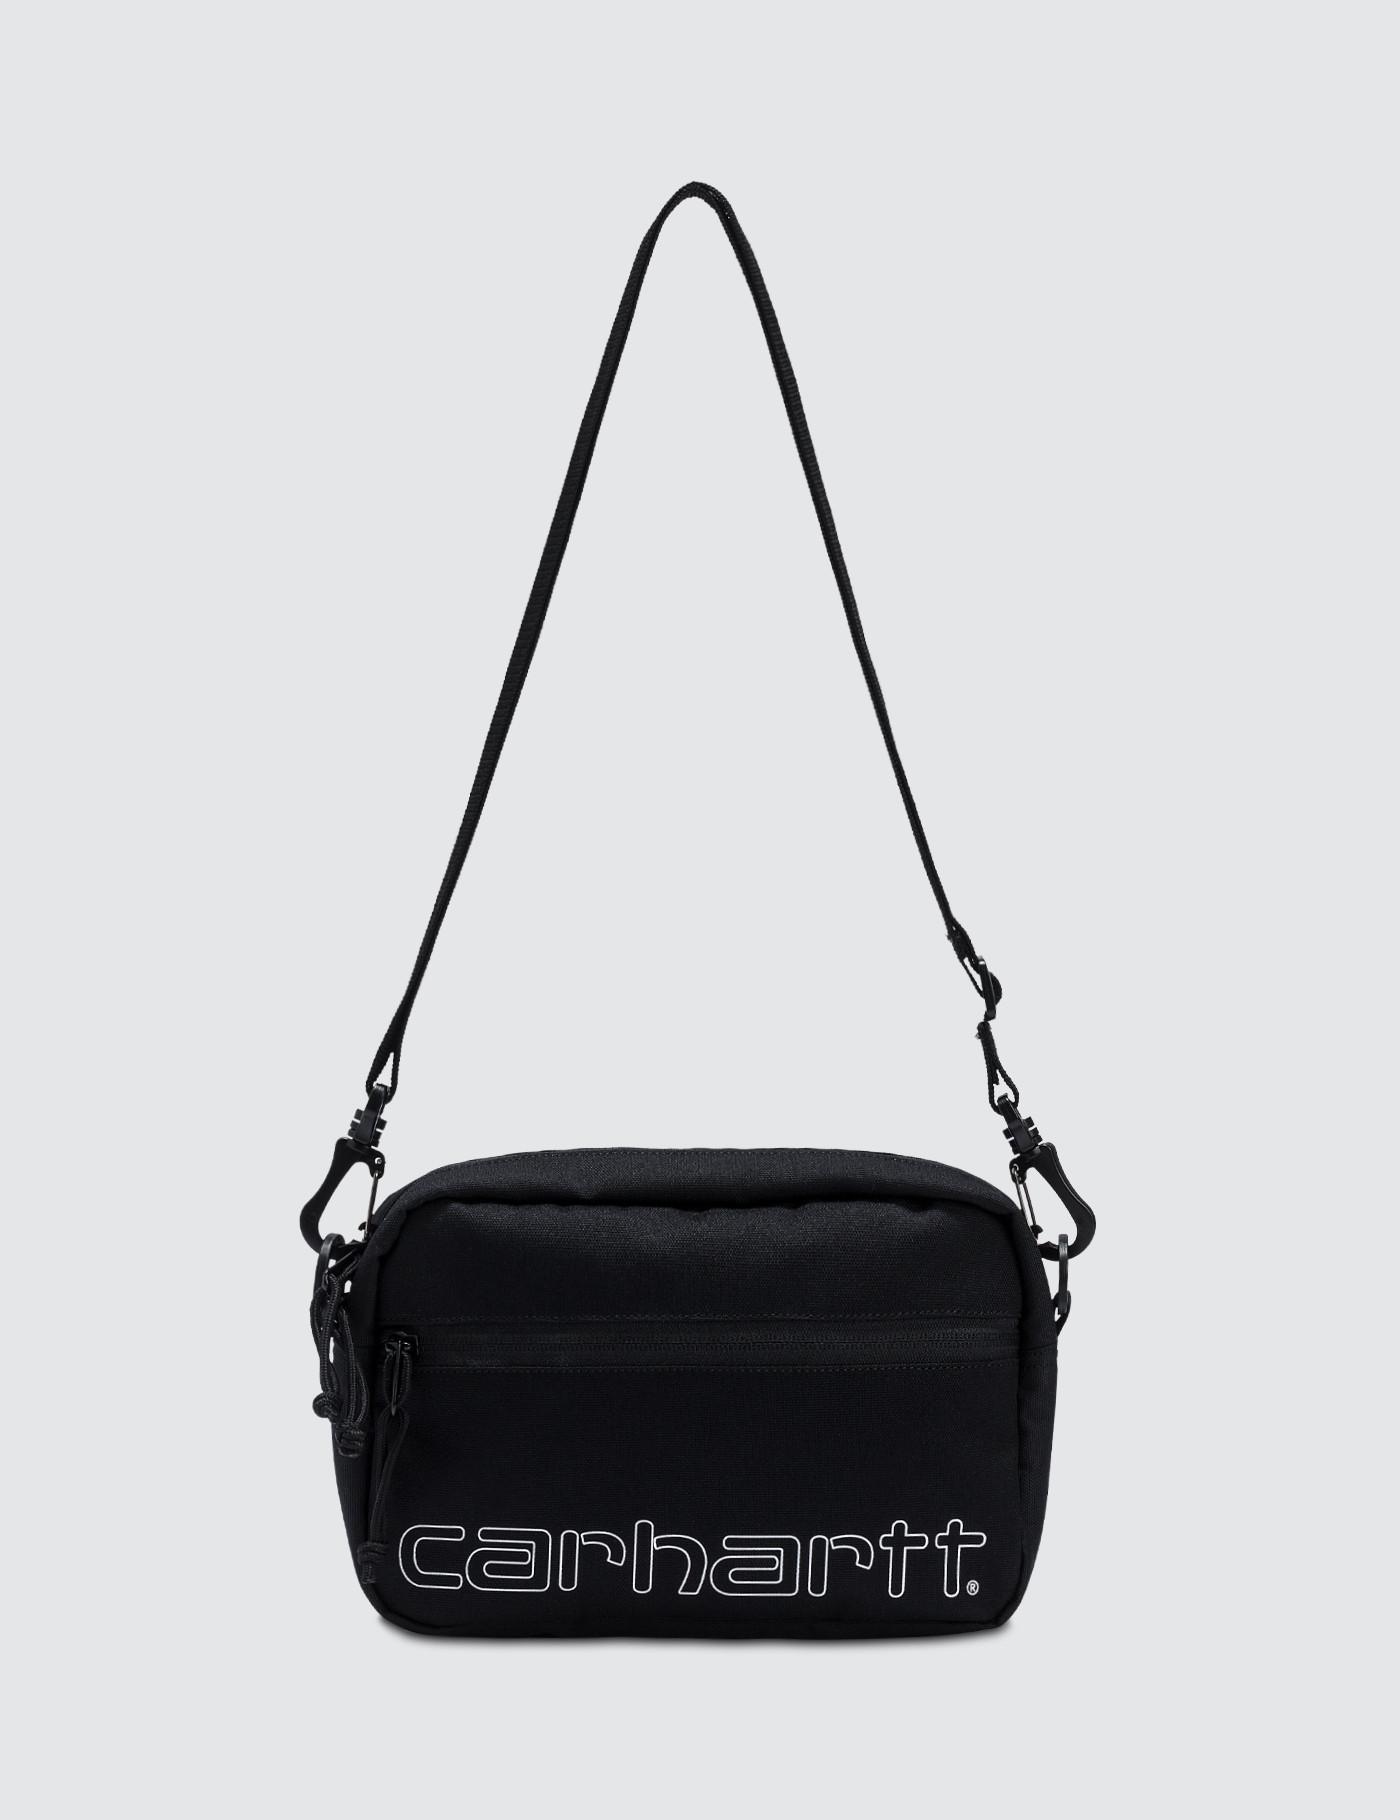 Lyst - Carhartt WIP Team Script Bag in Black for Men - Save 8%